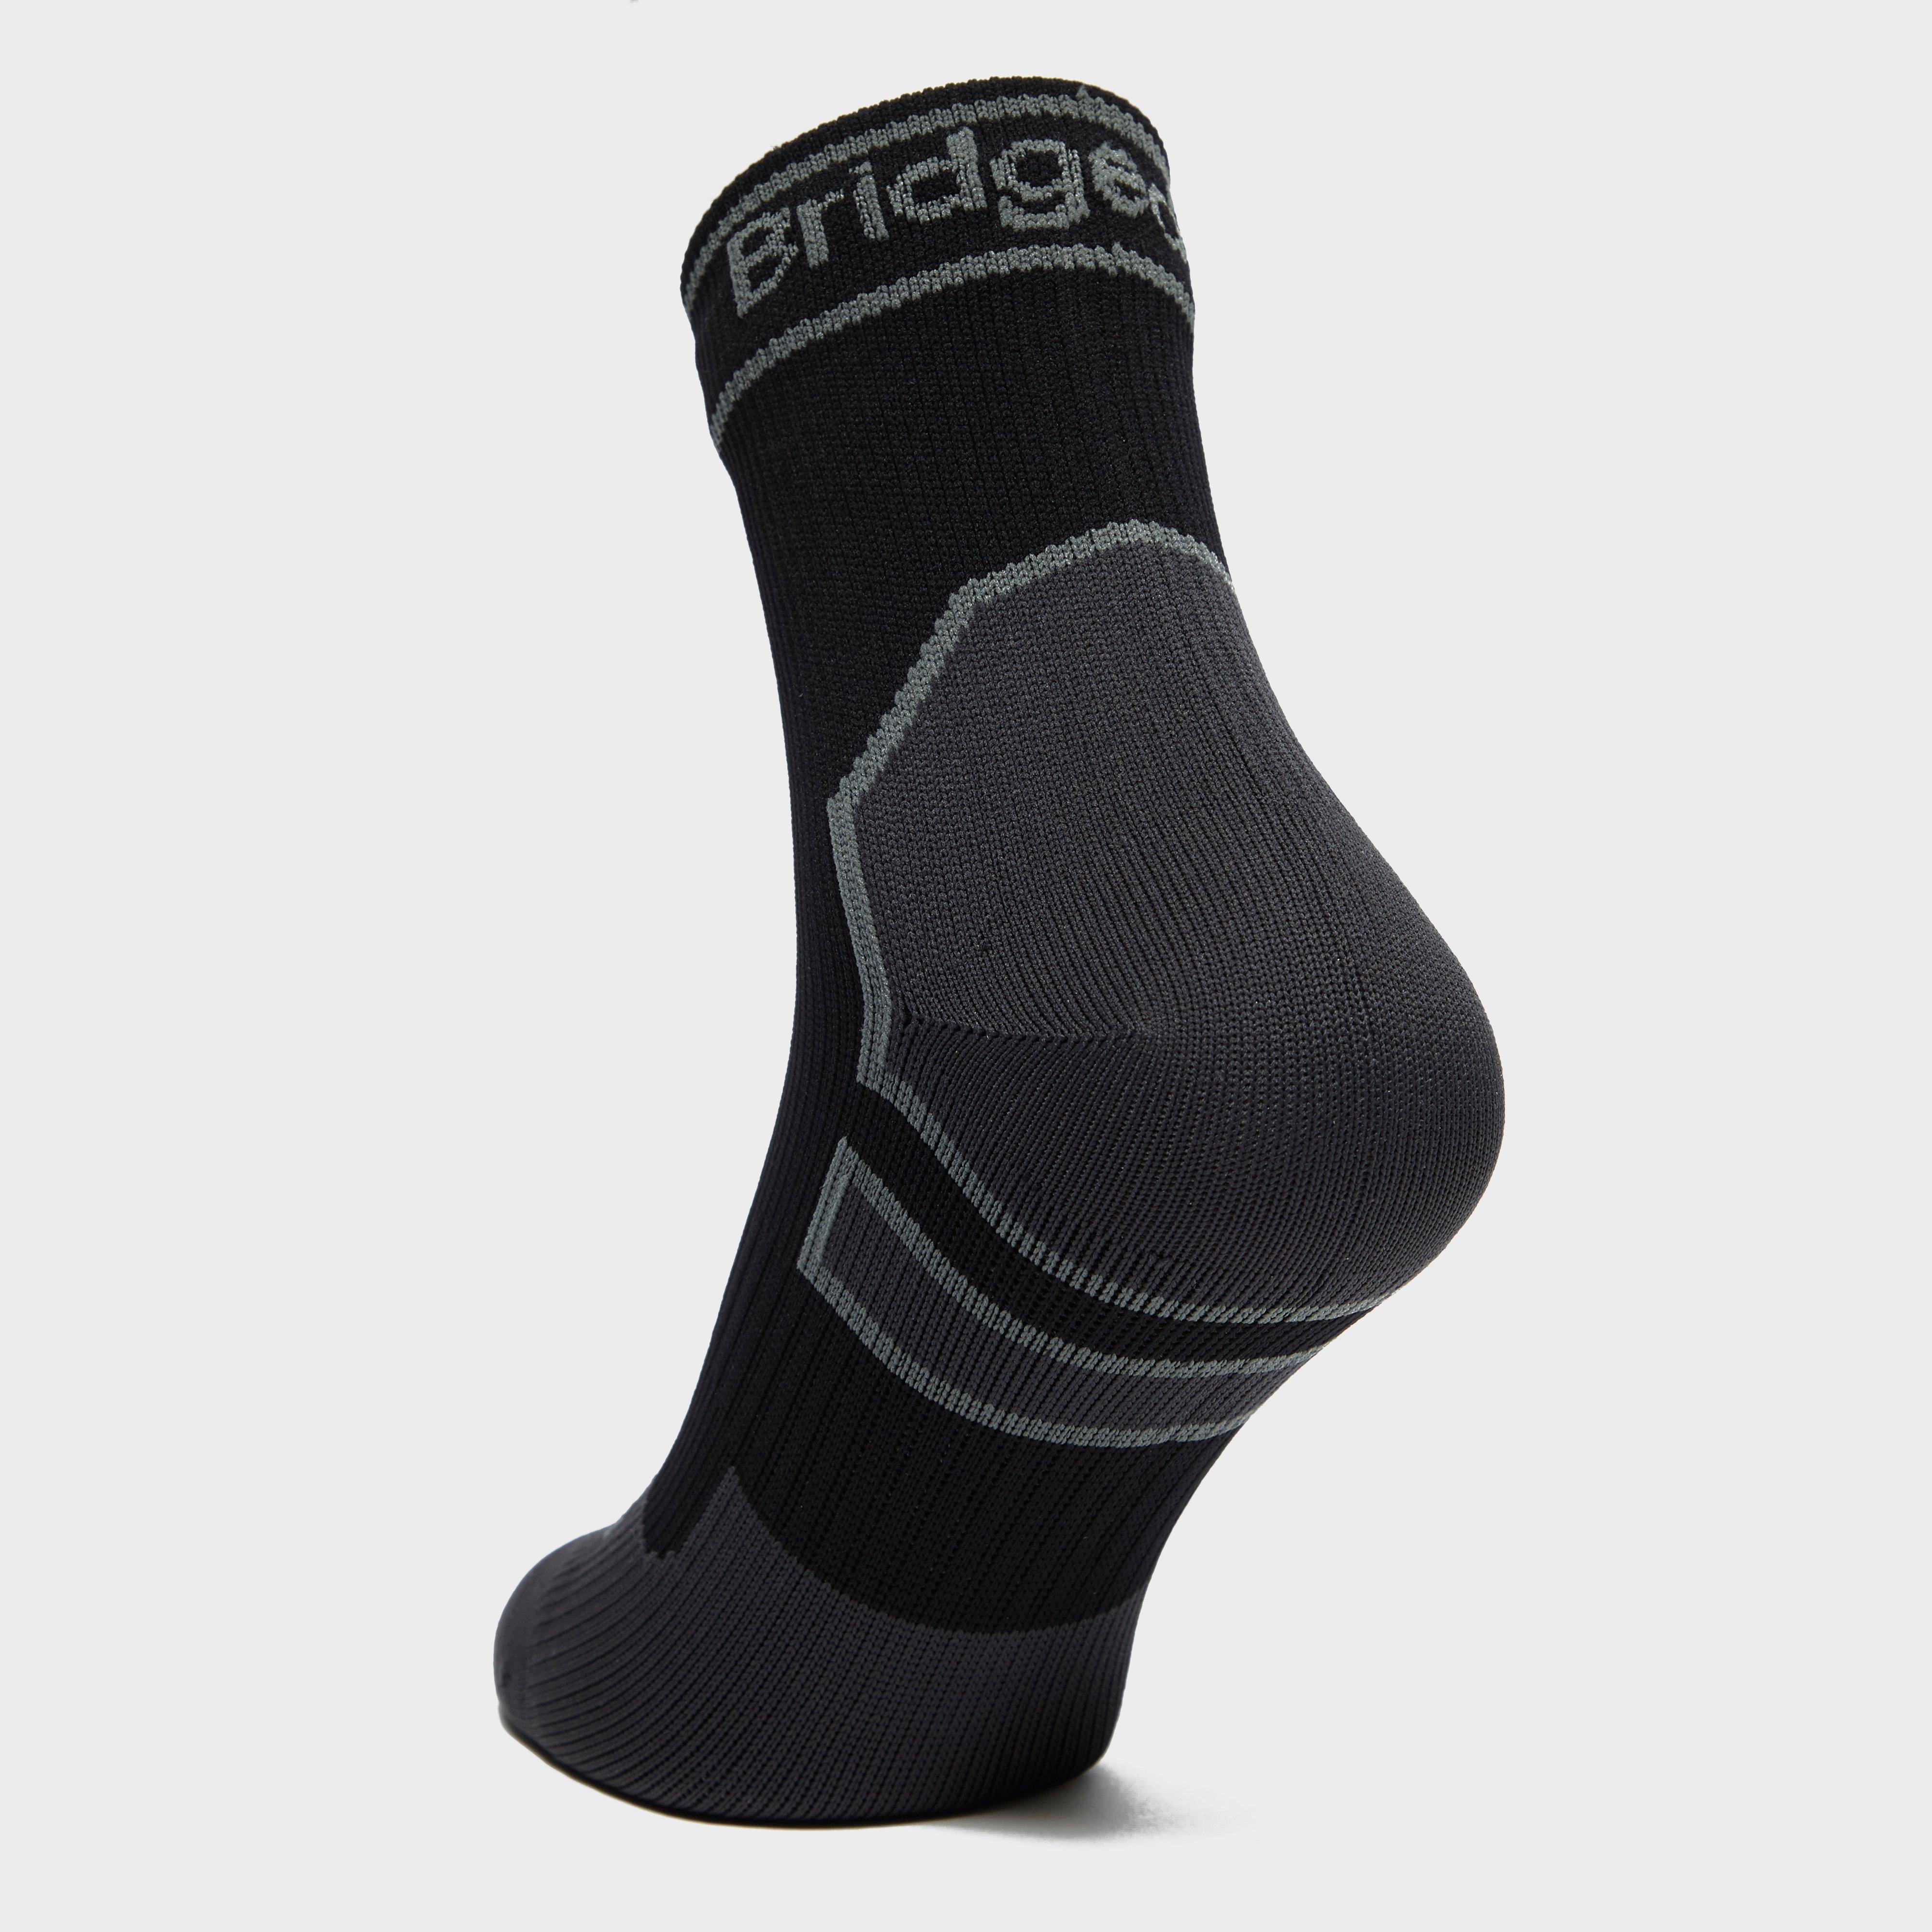 Bridgedale StormSock Lightweight Ankle Socks Review